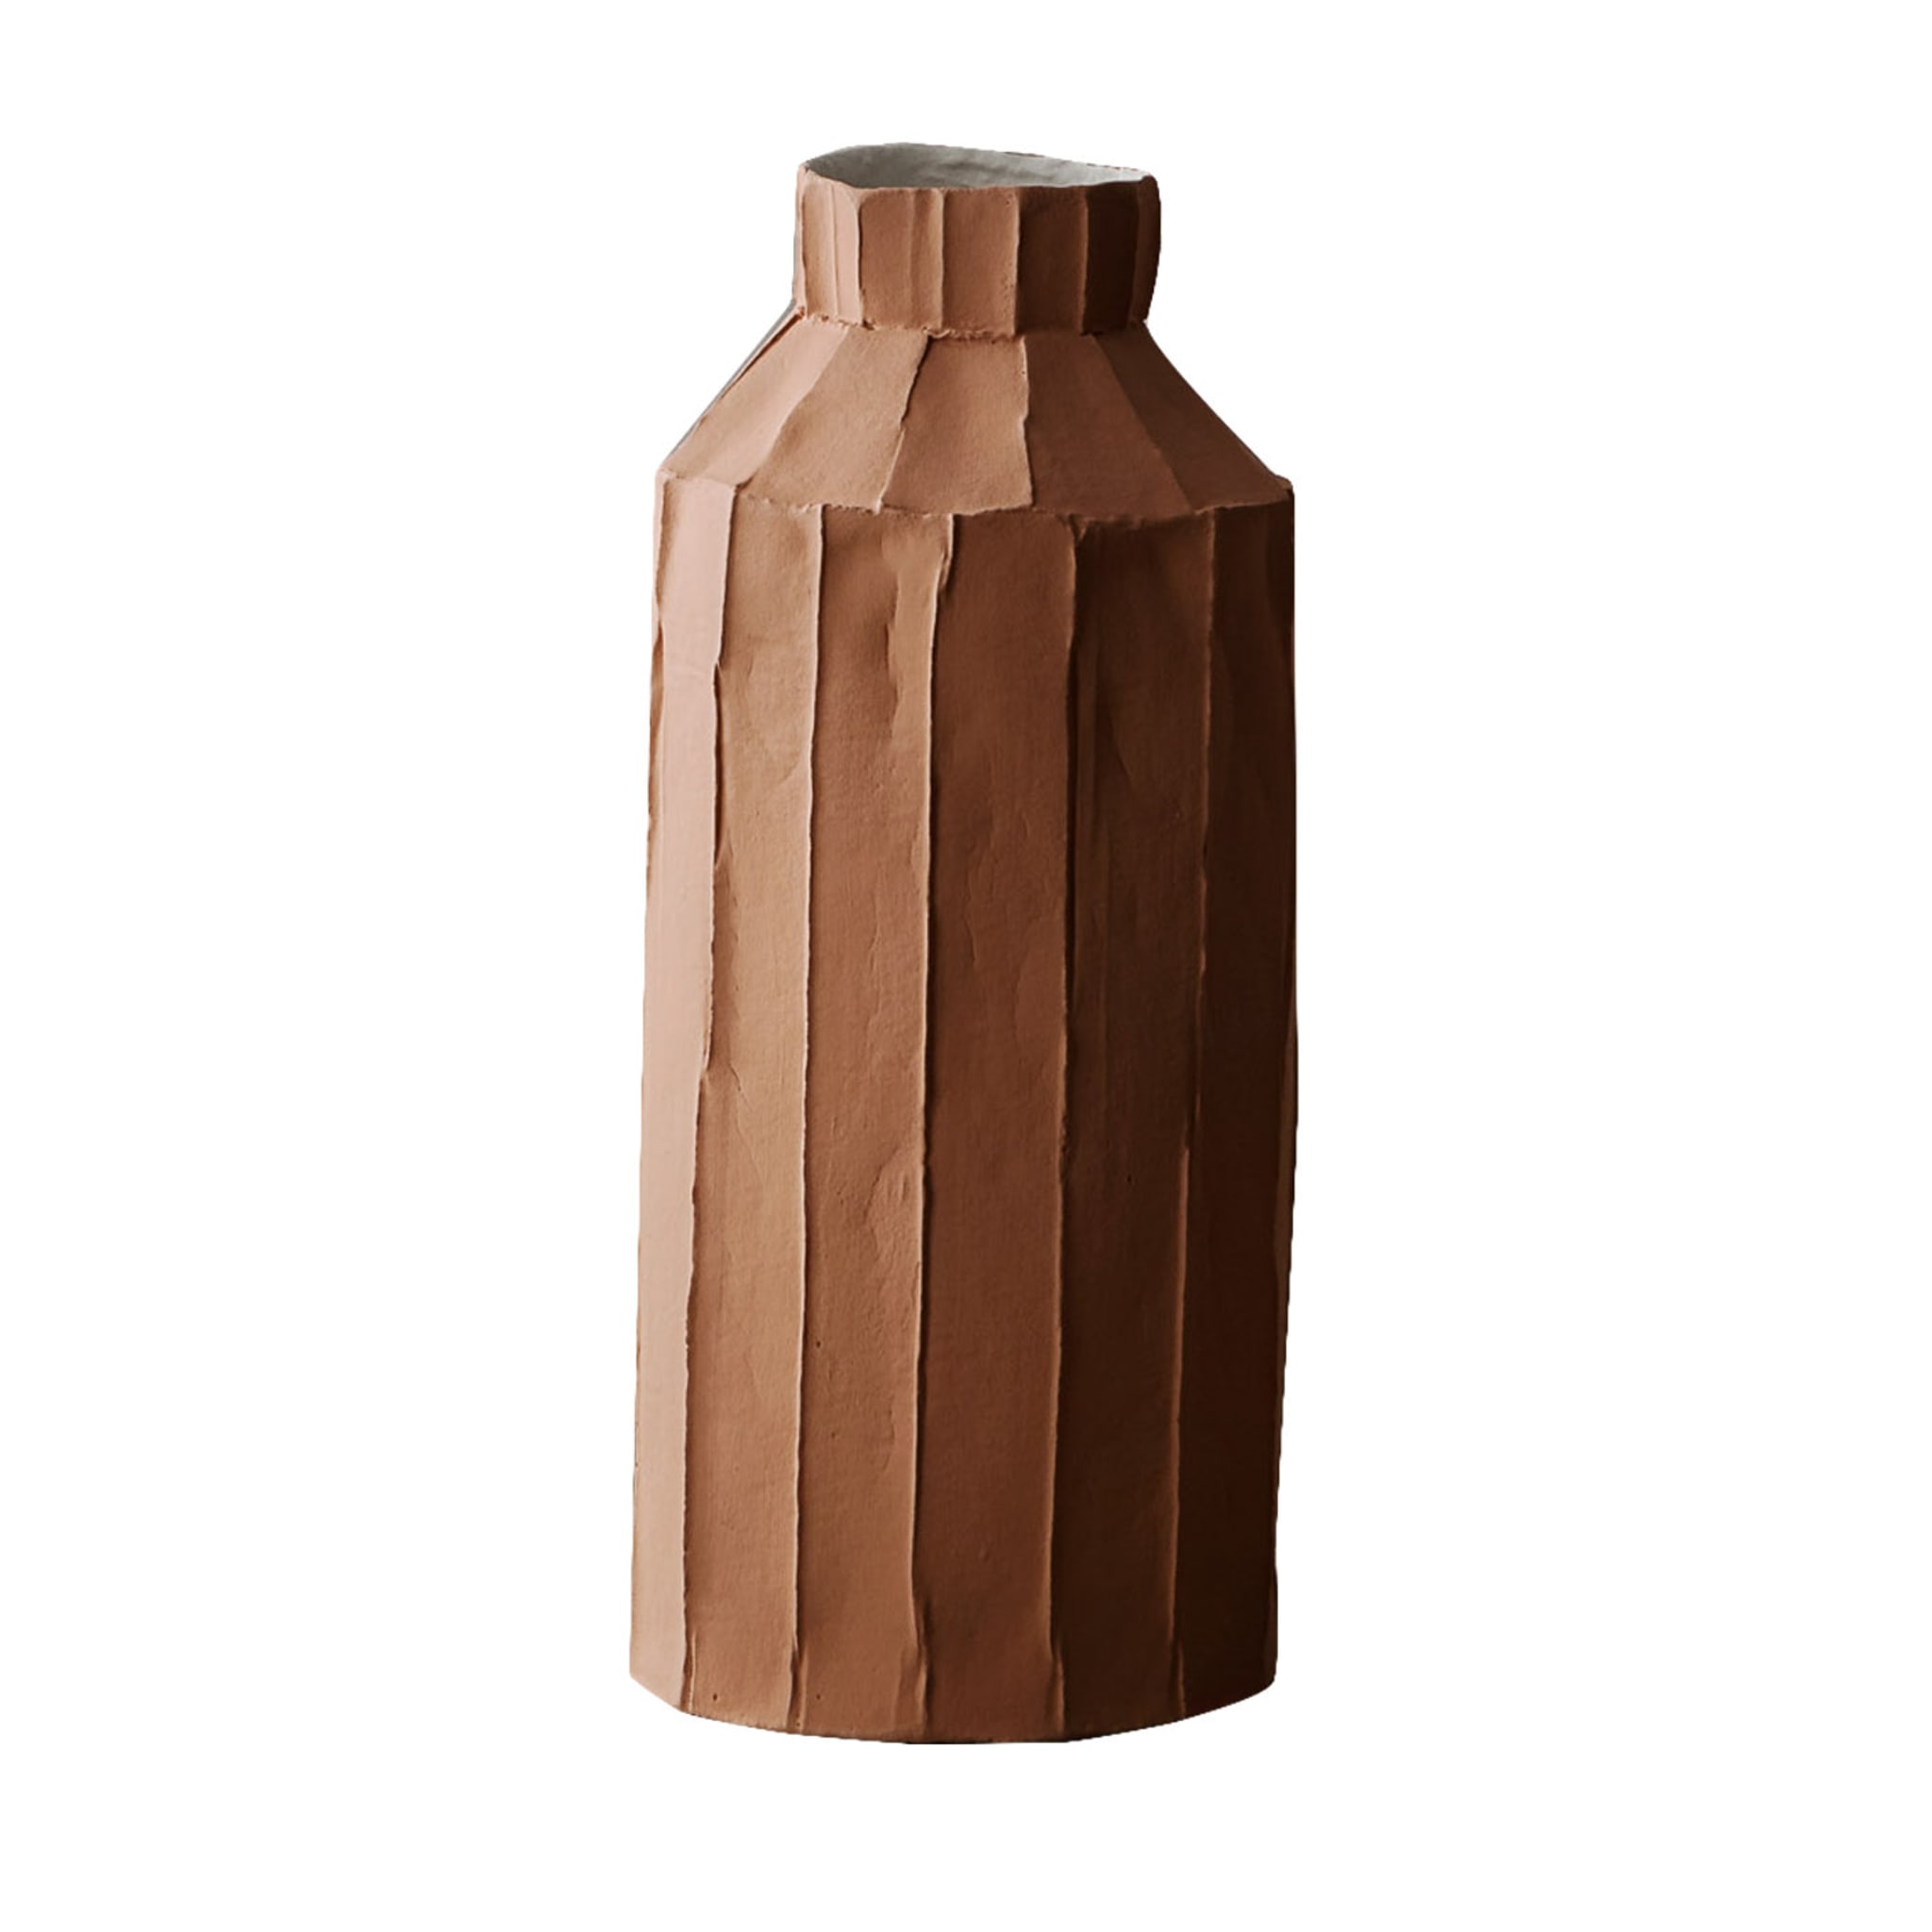 Cartocci Corteccia Fide Vase aus rotem Backstein - Hauptansicht